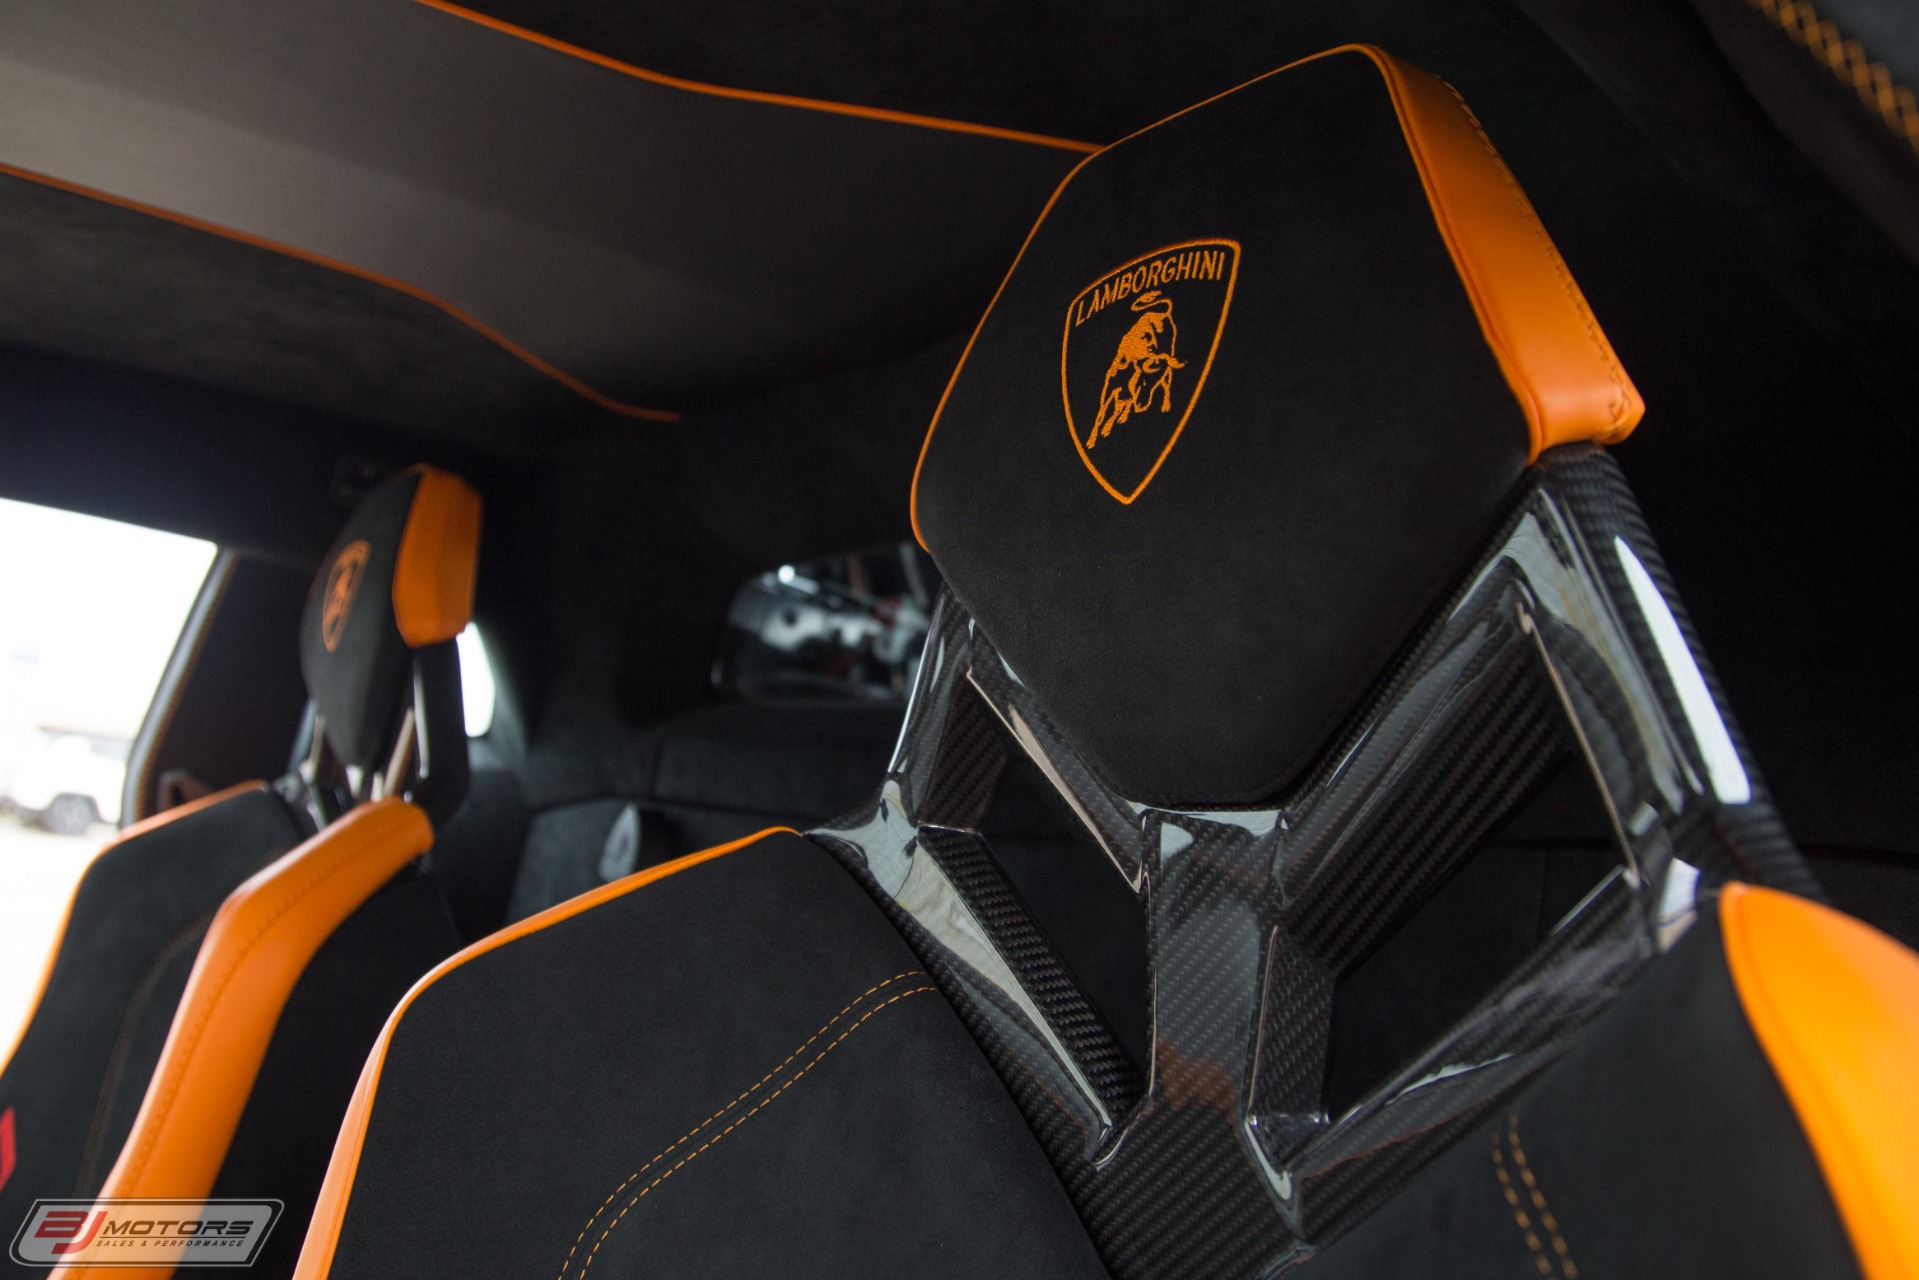 New-2019-Lamborghini-Aventador-SVJ-LP770-4-Delivery-Miles-Available-Now-No-Wait